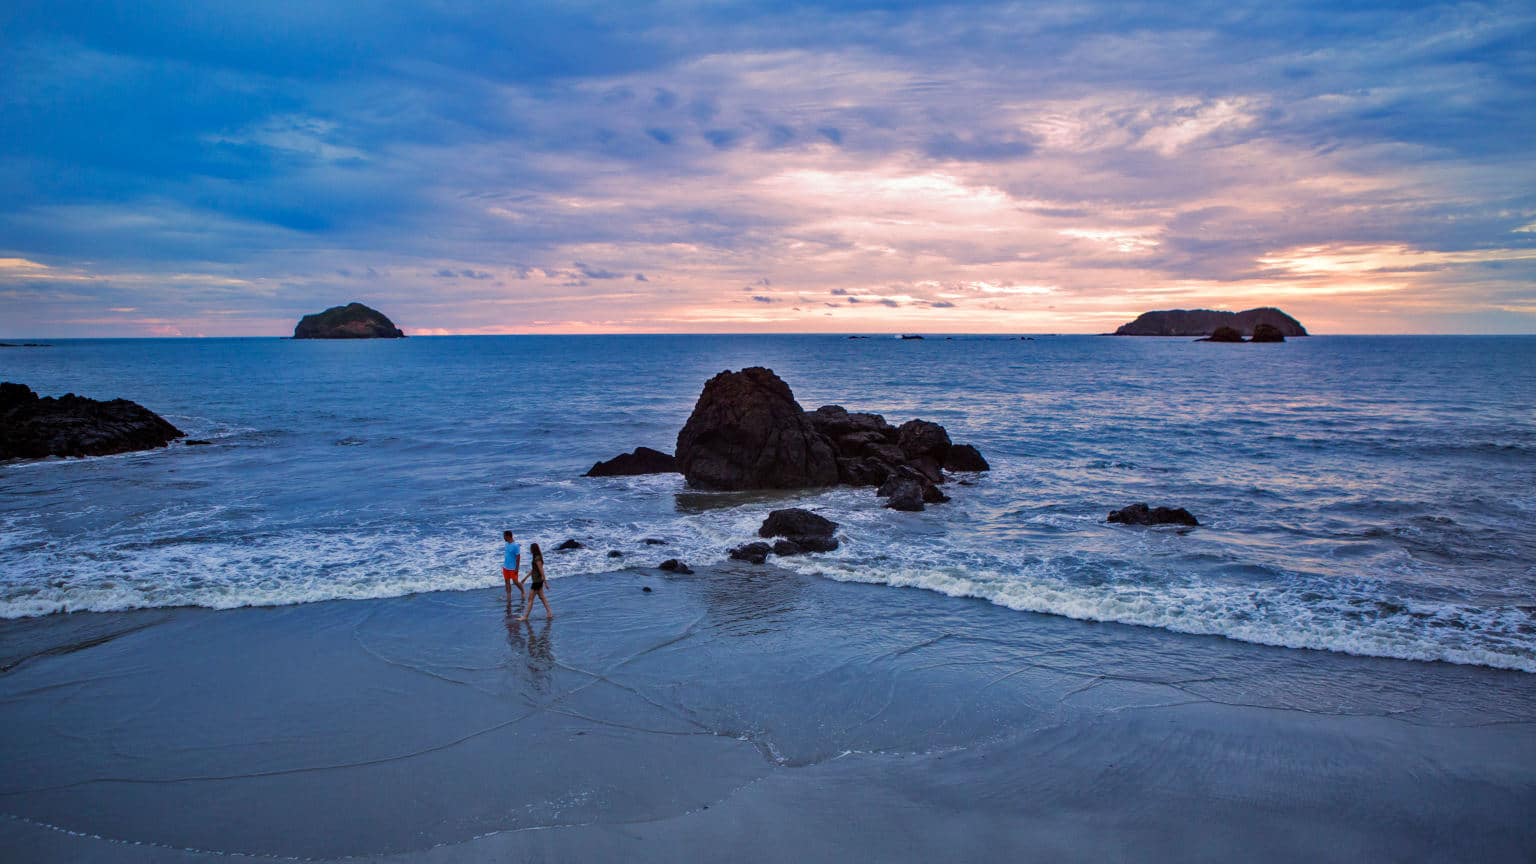 Costa-Rica-Manual-Antonio-Beach-Sunset-Couple